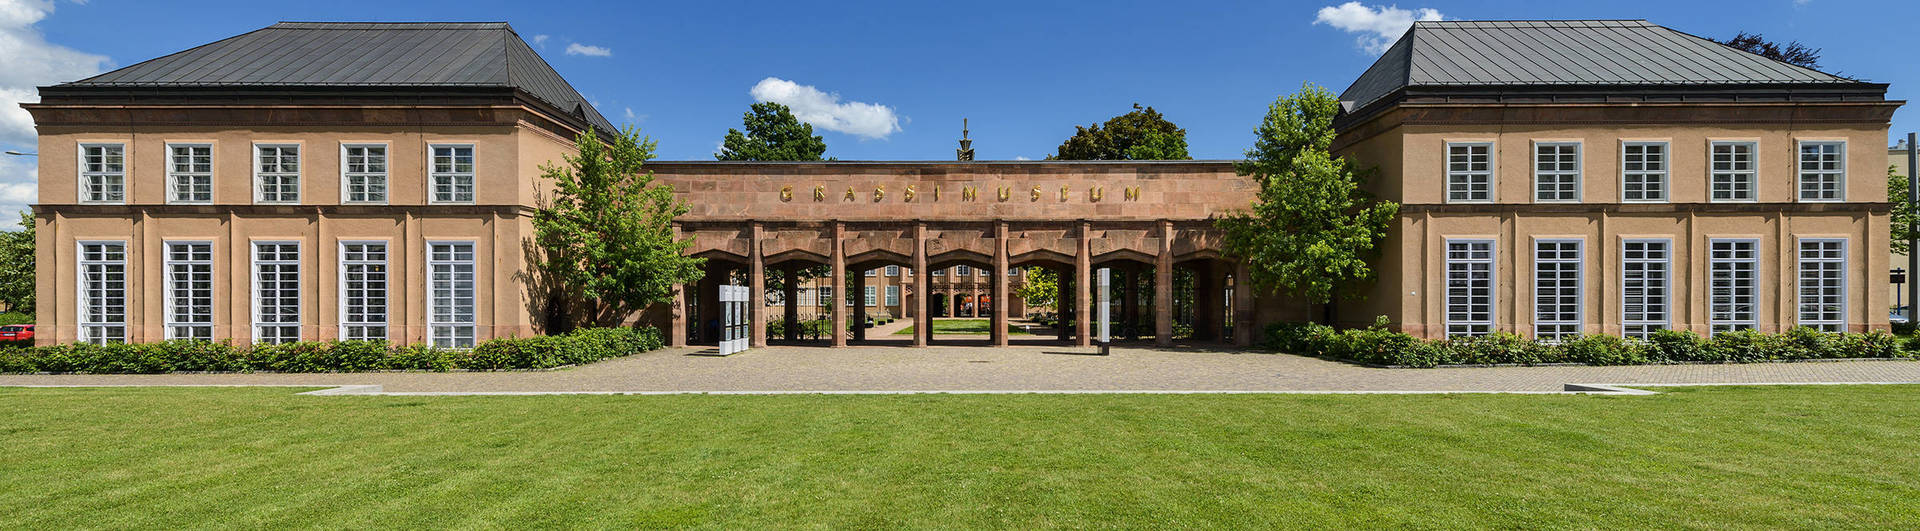 Grassimuseum Leipzig - Hyperion Hotel Leipzig - Offizielle Webseite